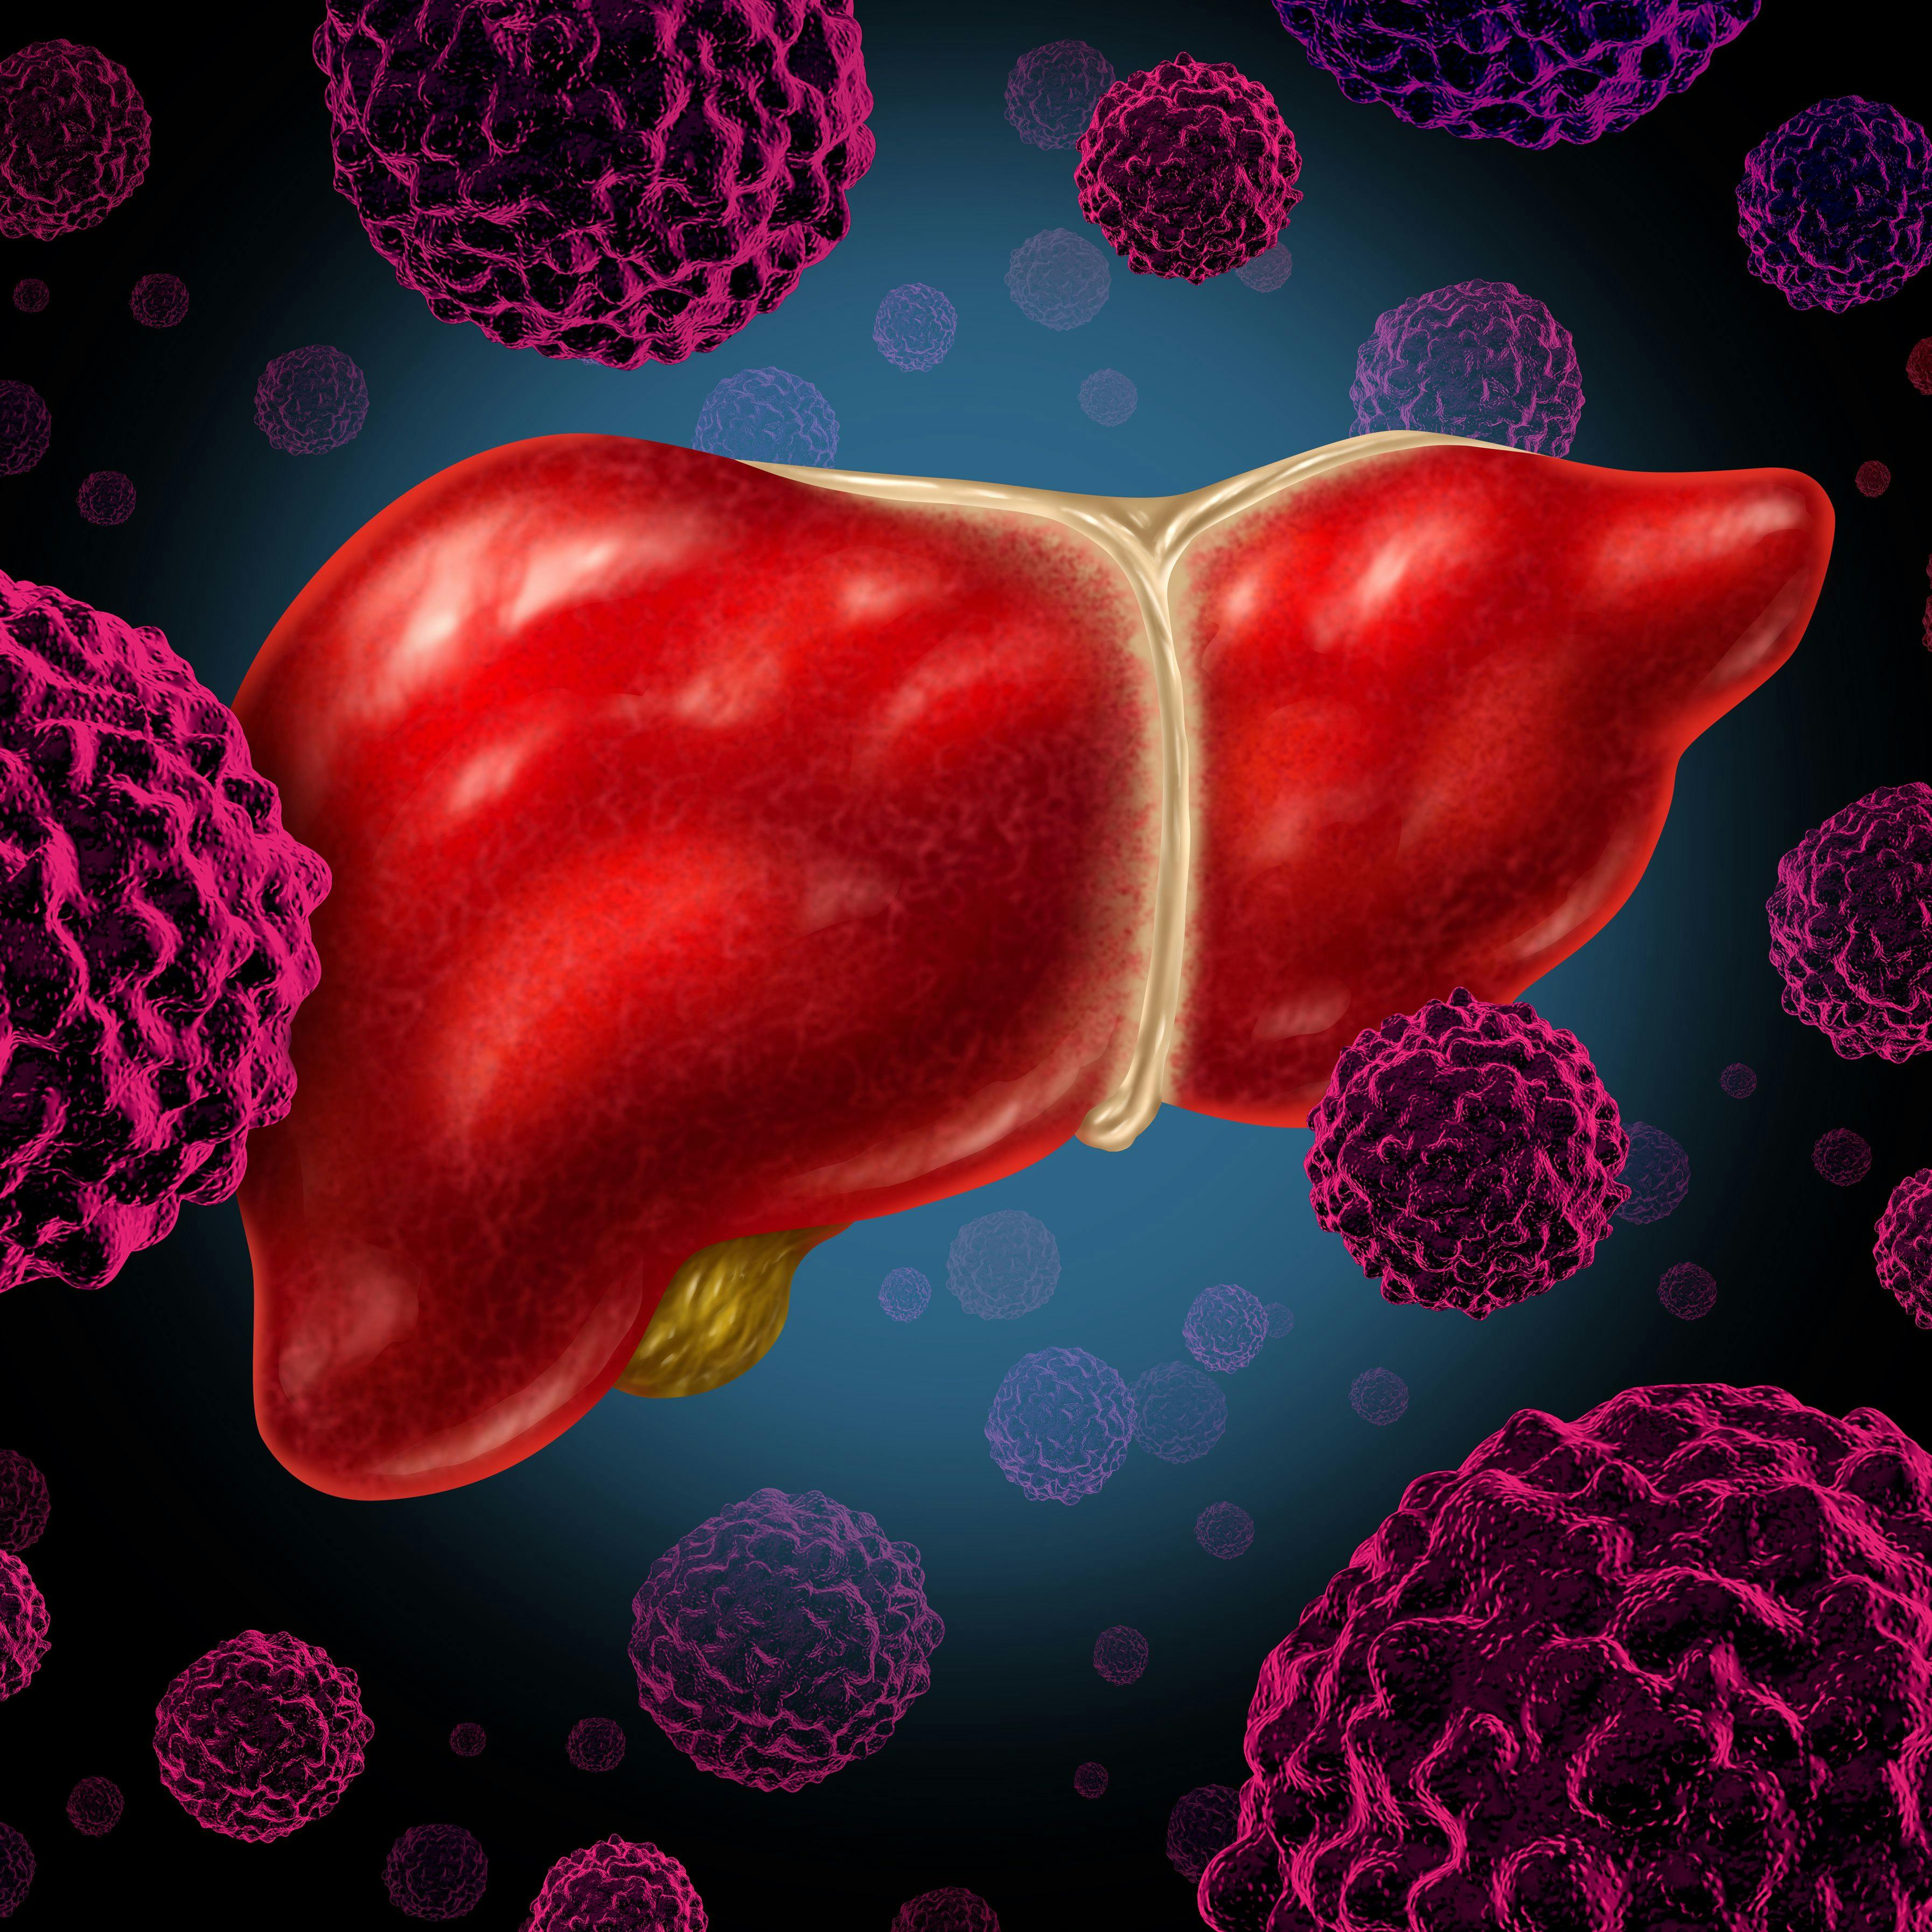 Illustration of a human liver